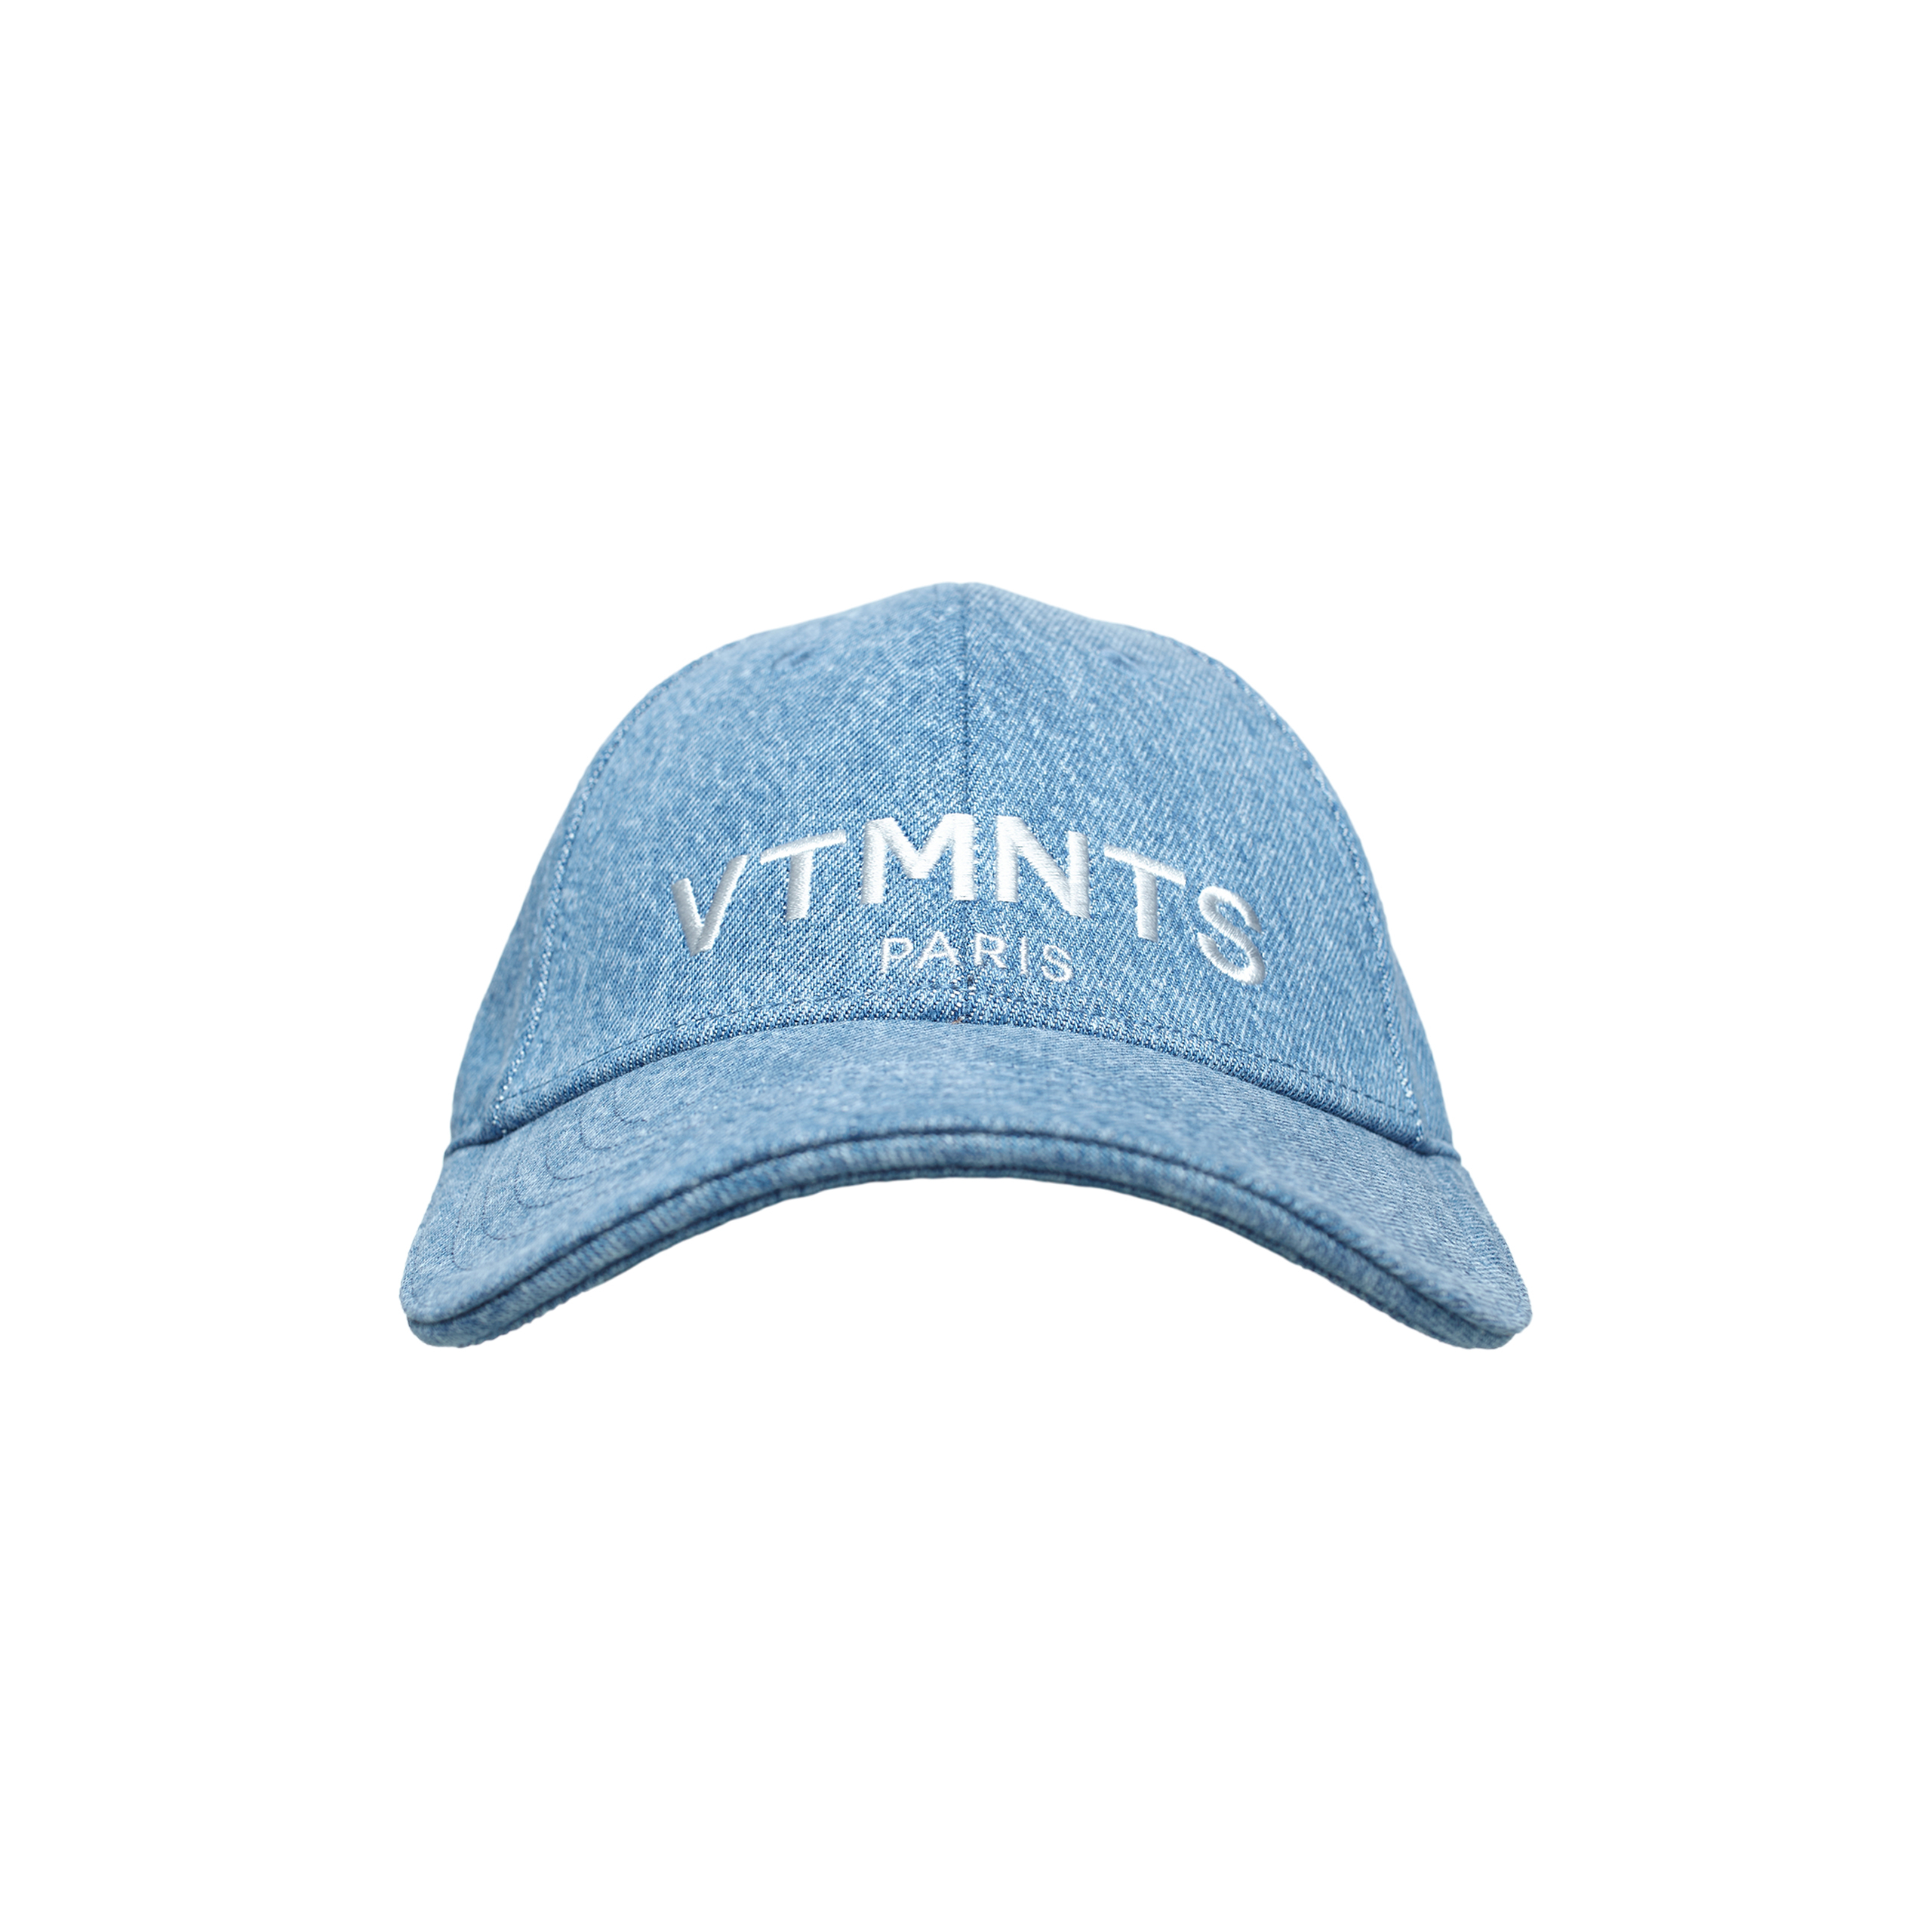 Джинсовая кепка с вышивкой логотипа VTMNTS VL20CA200NW/5401, размер One Size VL20CA200NW/5401 - фото 3